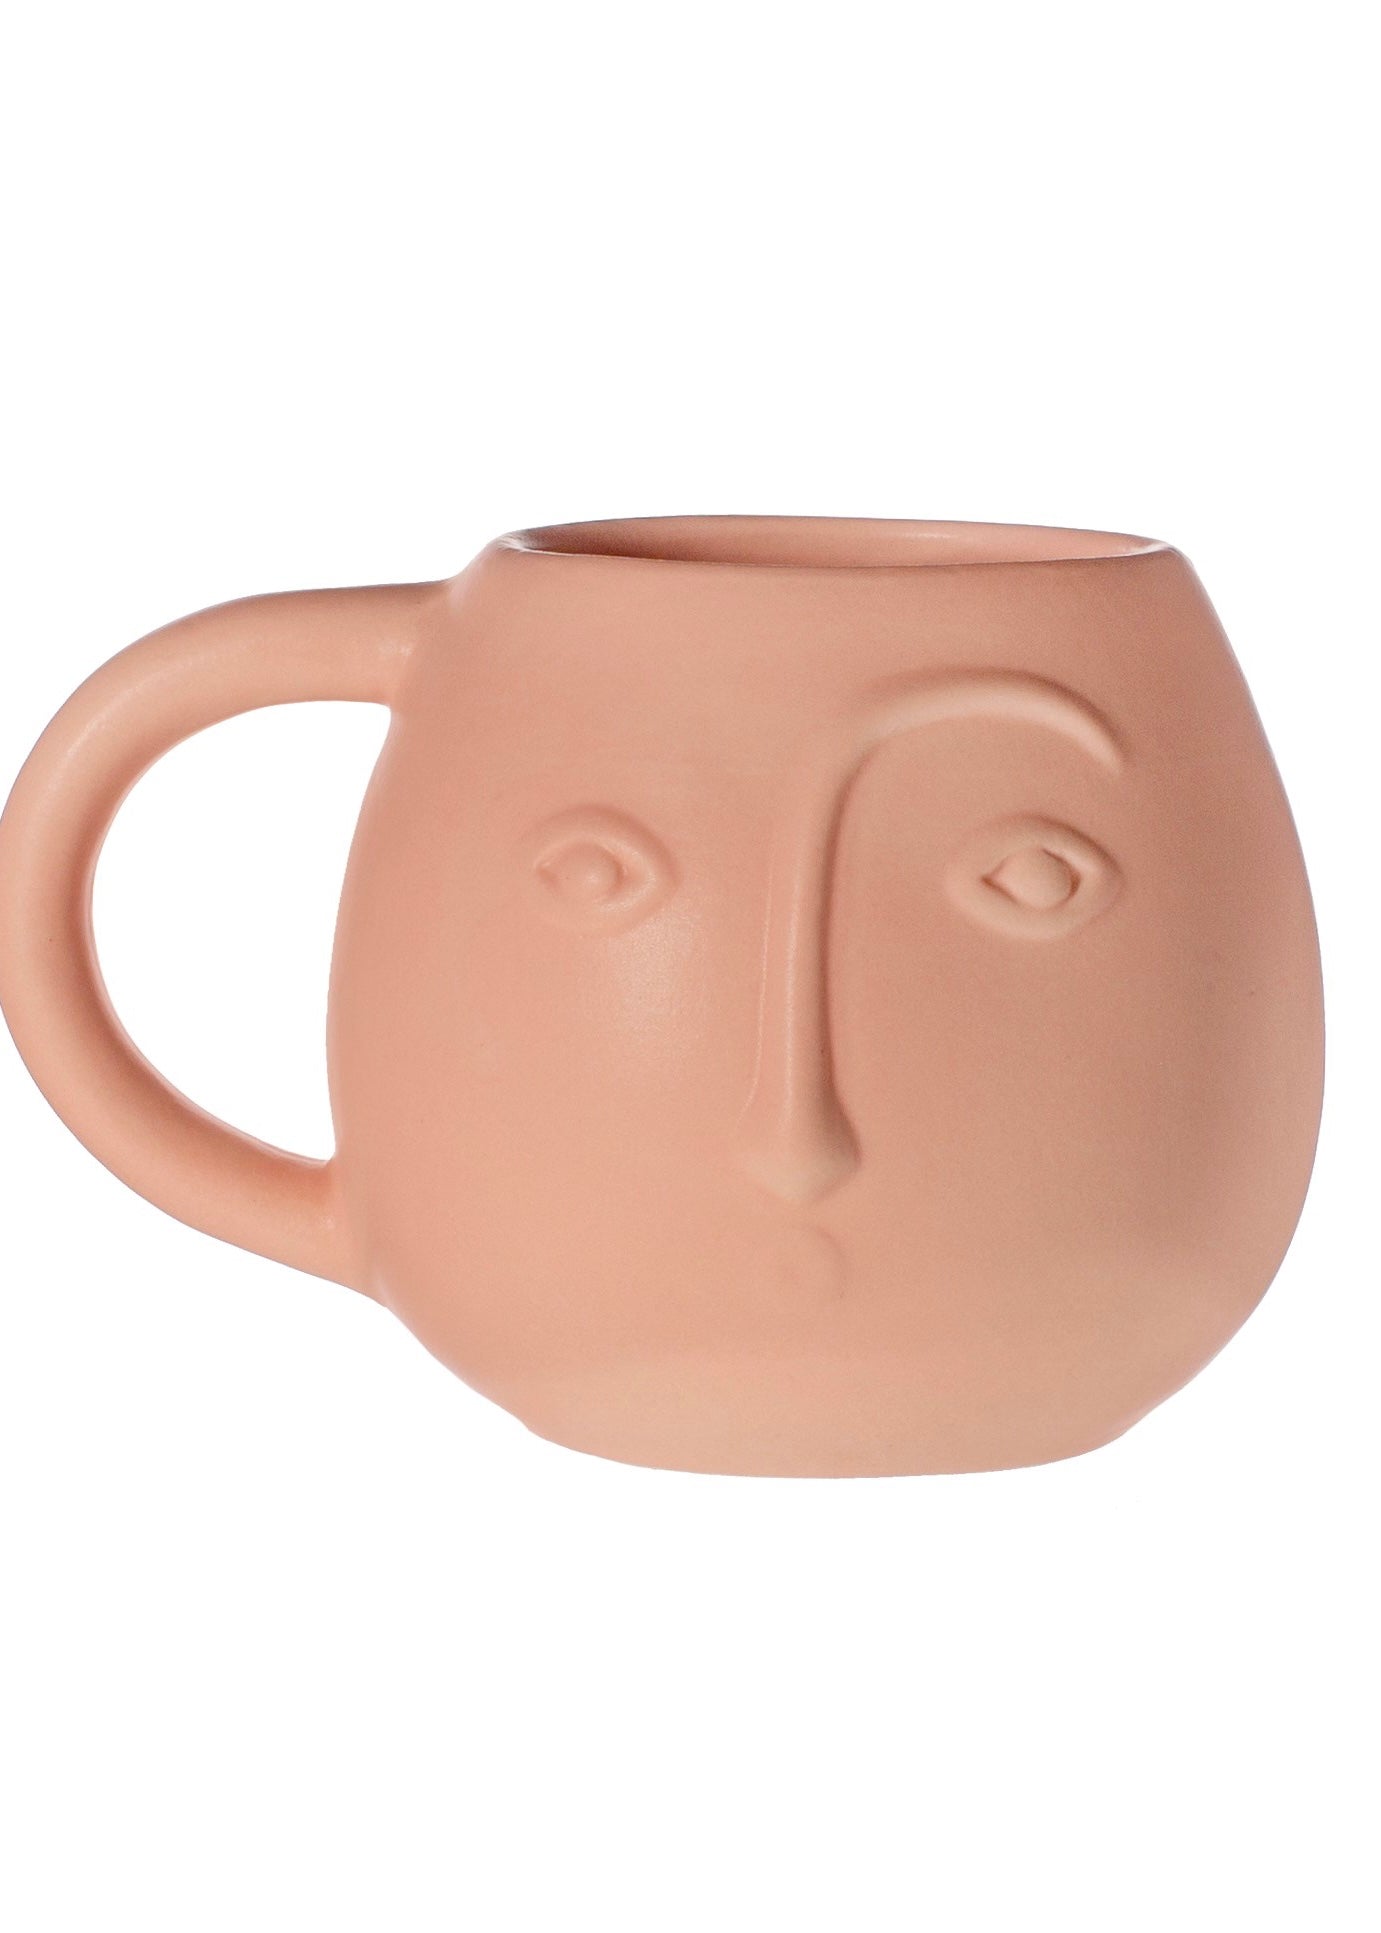 Pink mug with face details 